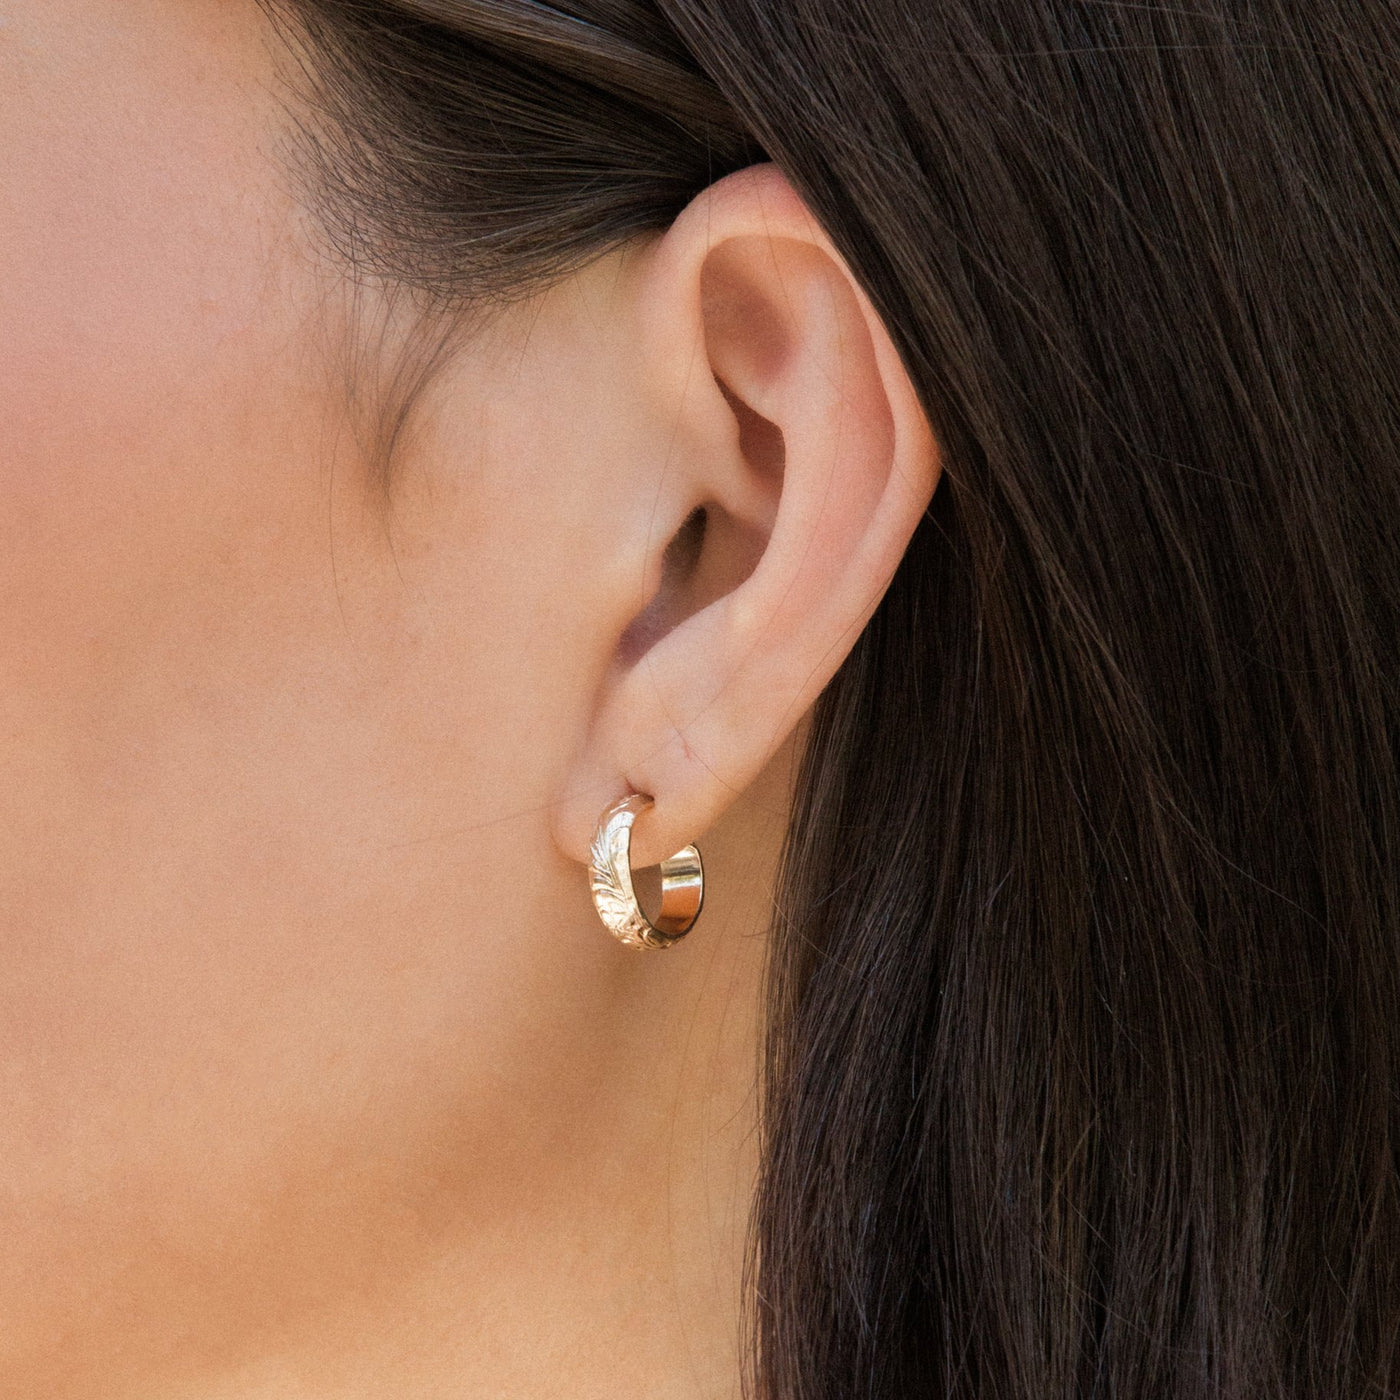 Buy WOWSHOW Large Big Gold Hoop Earrings Wide Flat Hoop Earrings Thick Hoops  for Women at Amazonin